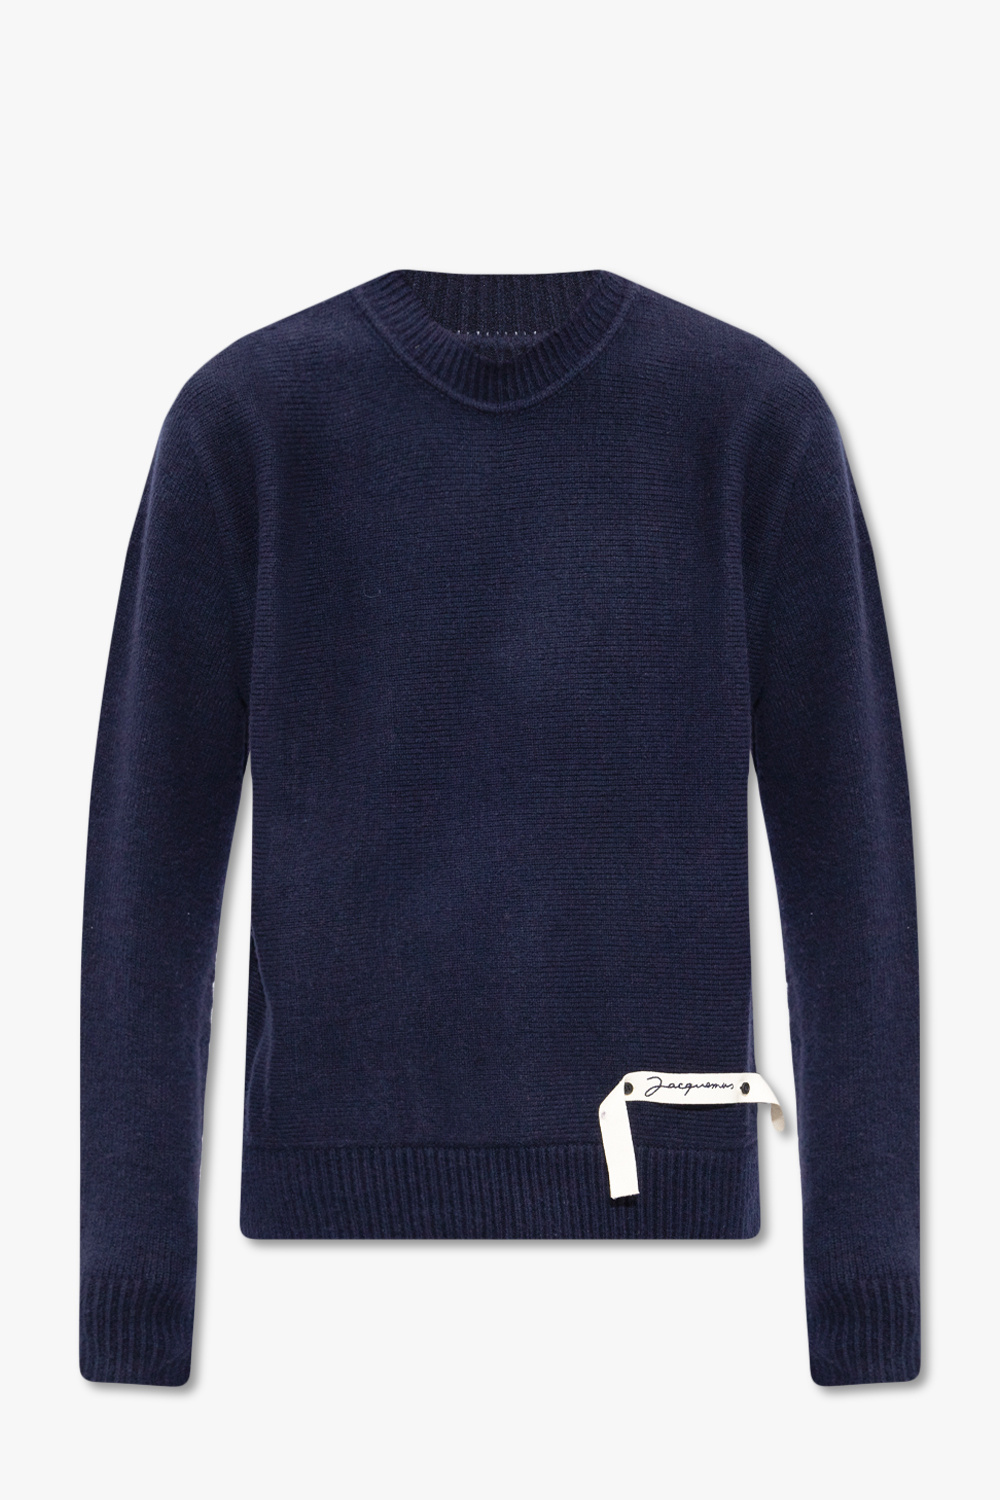 Jacquemus ‘Gardian’ sweater with logo